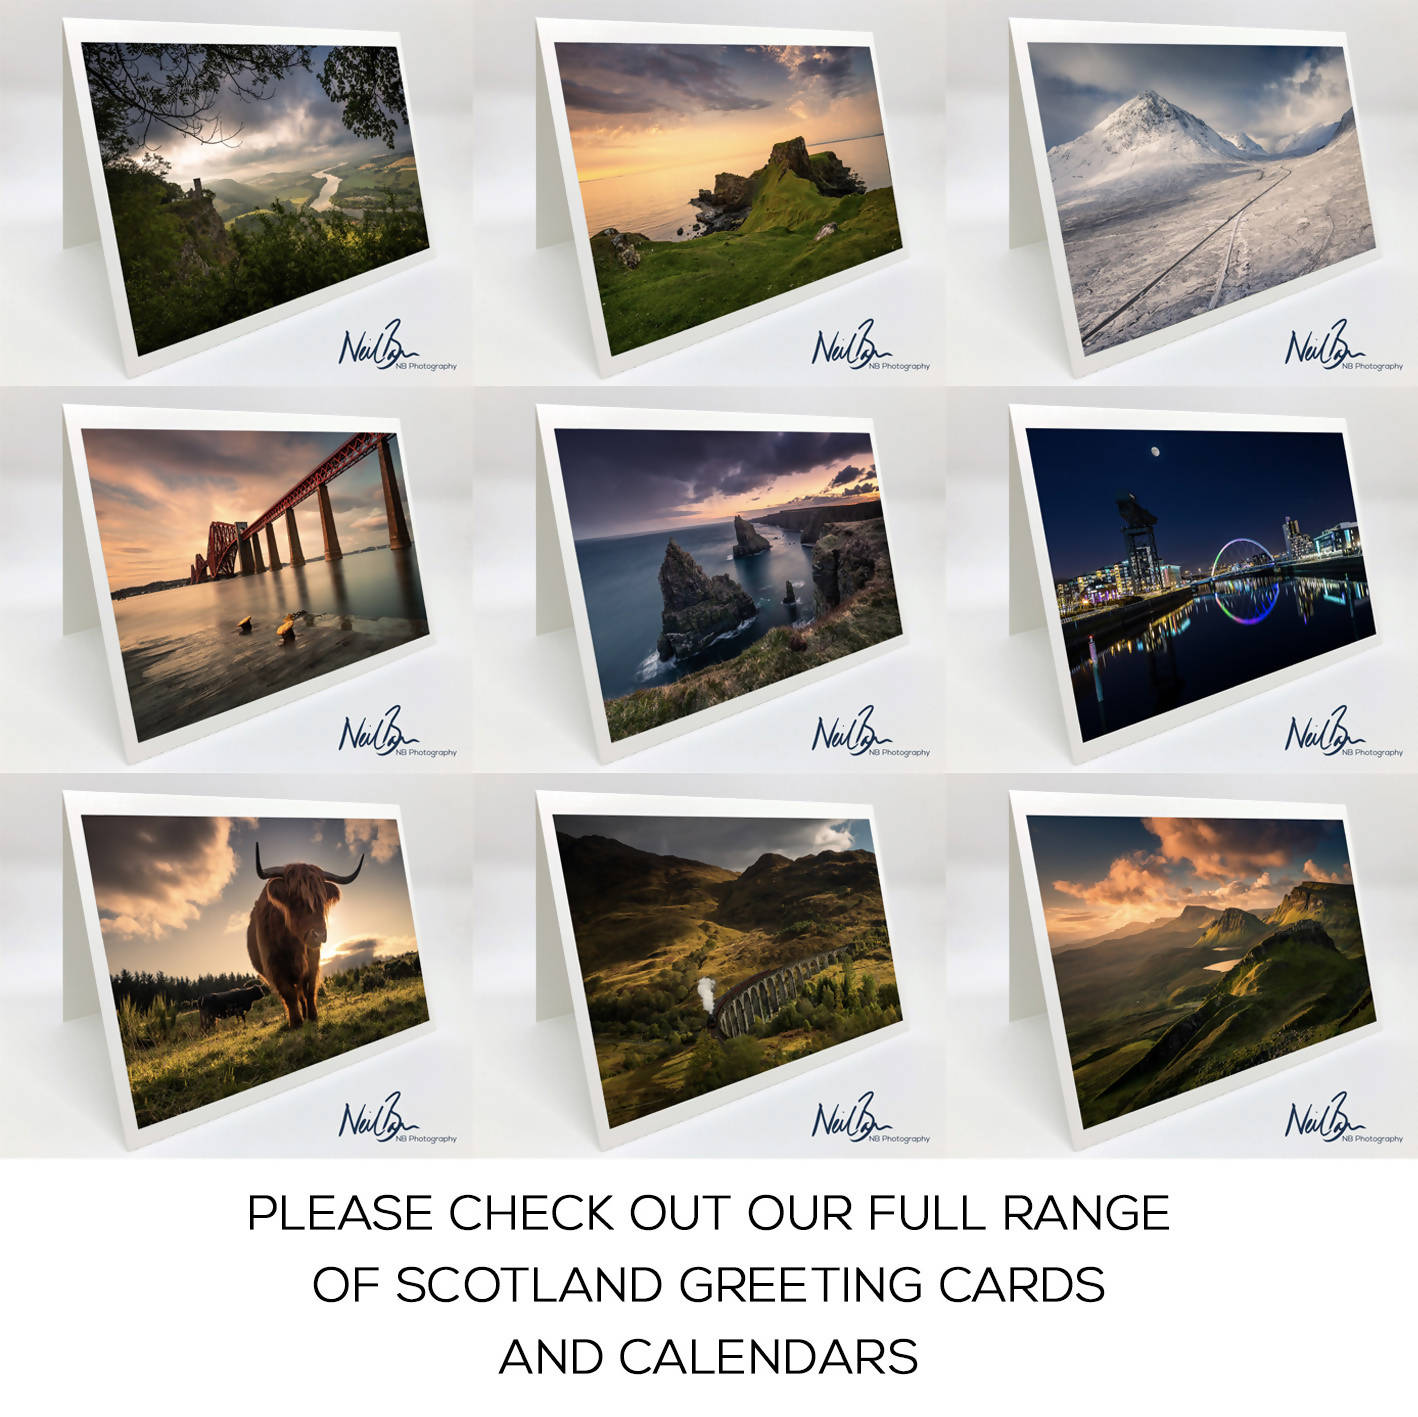 The Duke, Queen Street, Glasgow - Scotland Greeting Card - Blank Inside